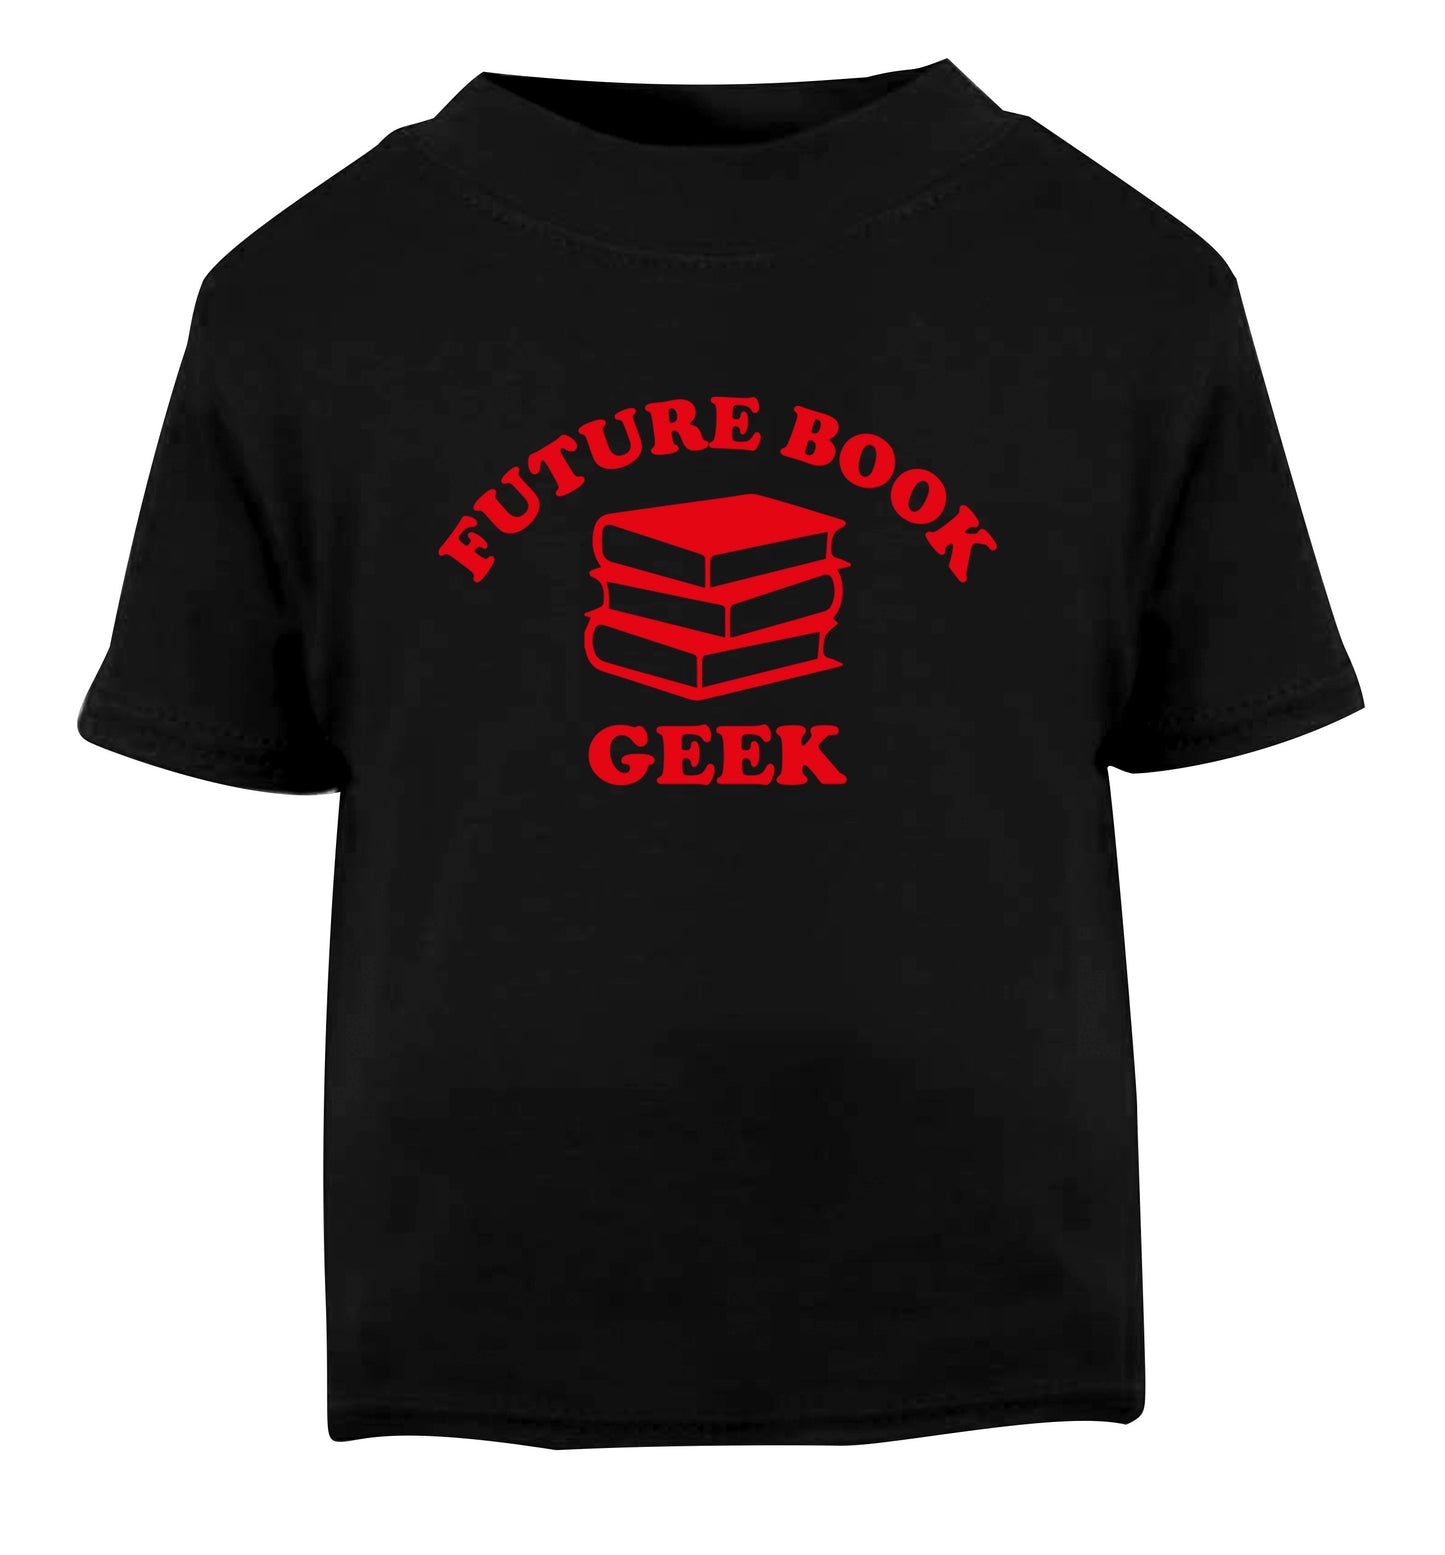 Future book geek Black Baby Toddler Tshirt 2 years